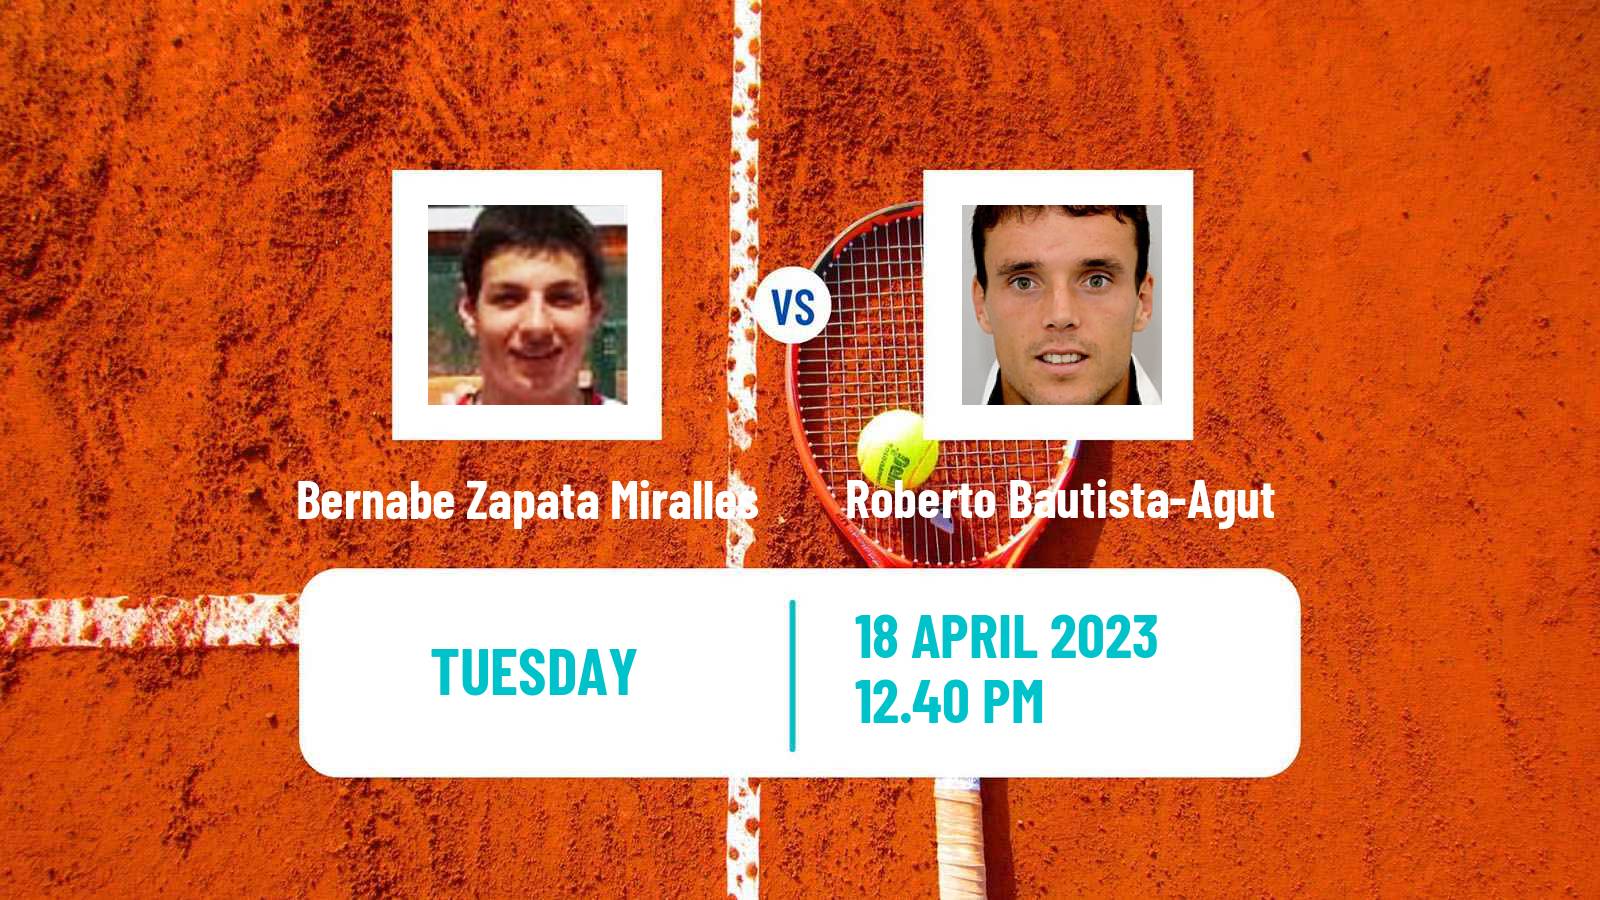 Tennis ATP Barcelona Bernabe Zapata Miralles - Roberto Bautista-Agut